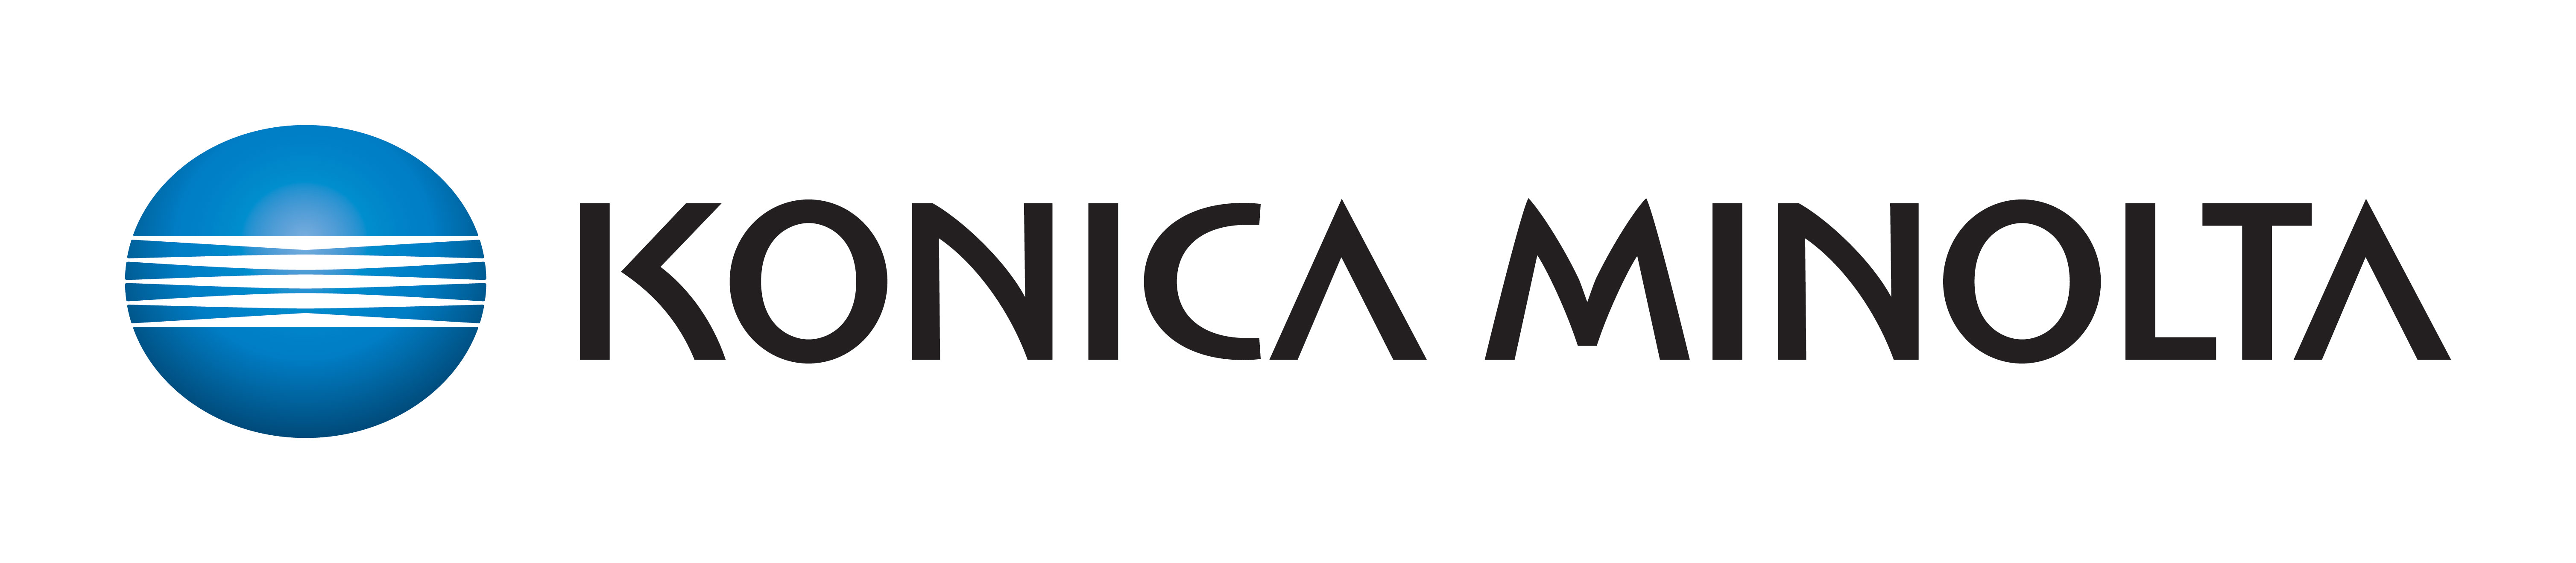 3D_Positive_Konica_Minolta_Horizontal_Logo